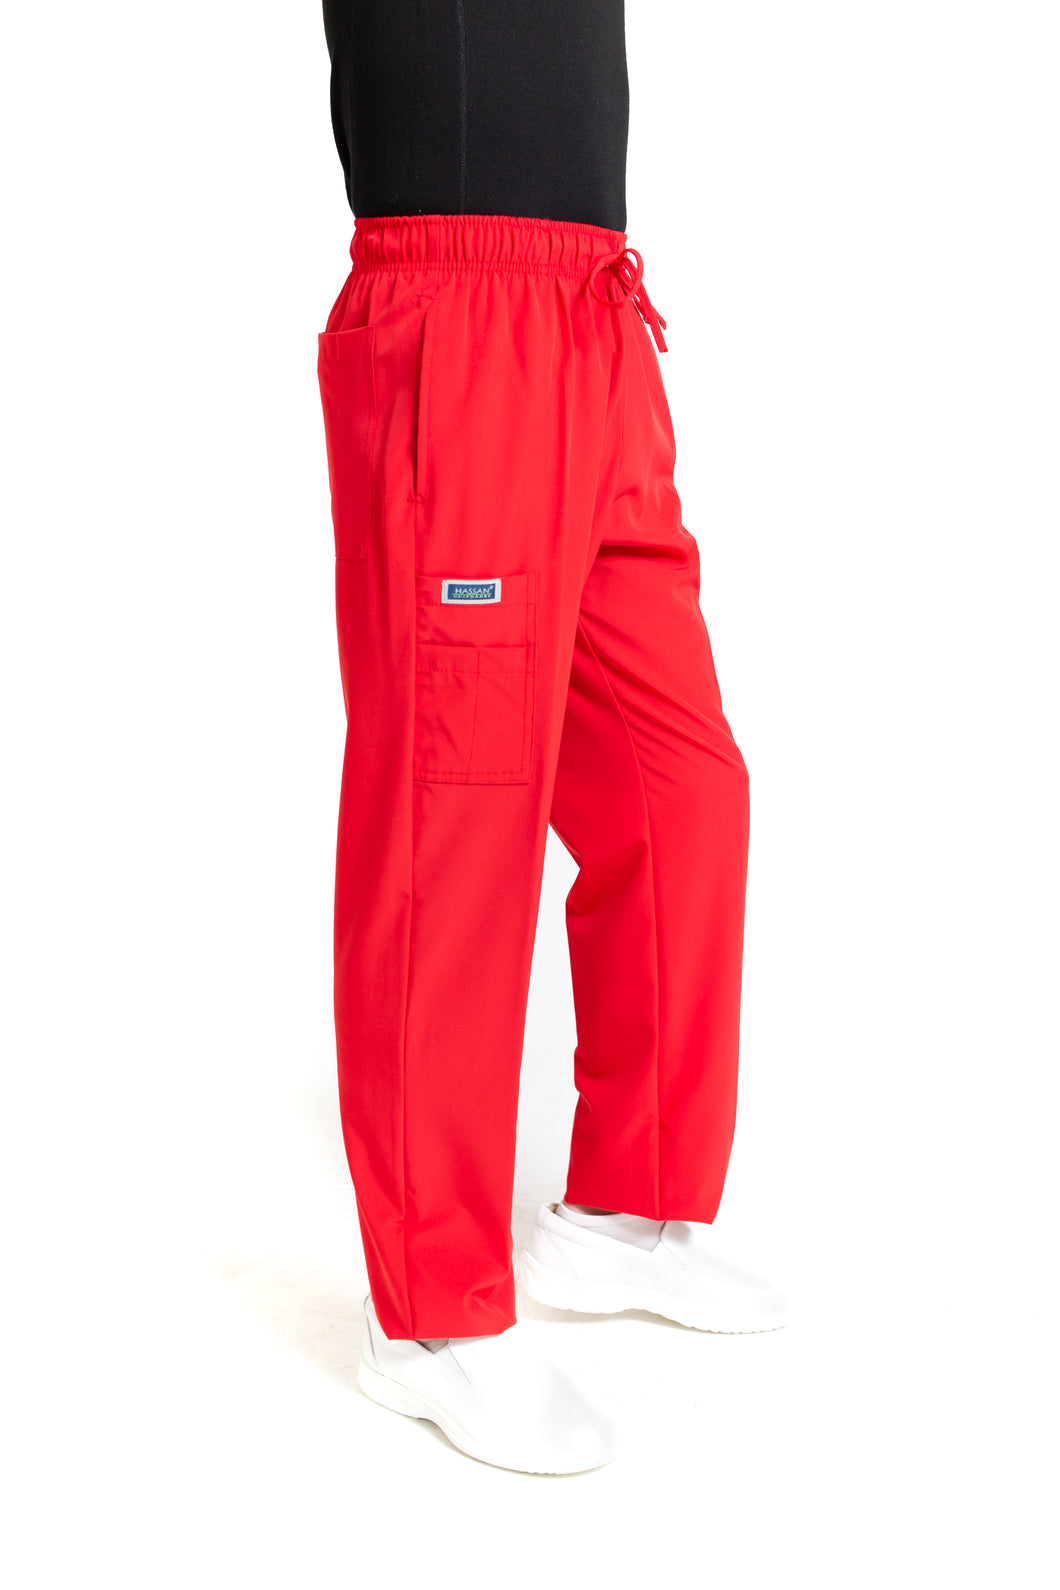 Pantalón Pant EA-02P REPELENTE A FLUIDOS-Color ROJO HOMBRE-HASSAN Uniformes